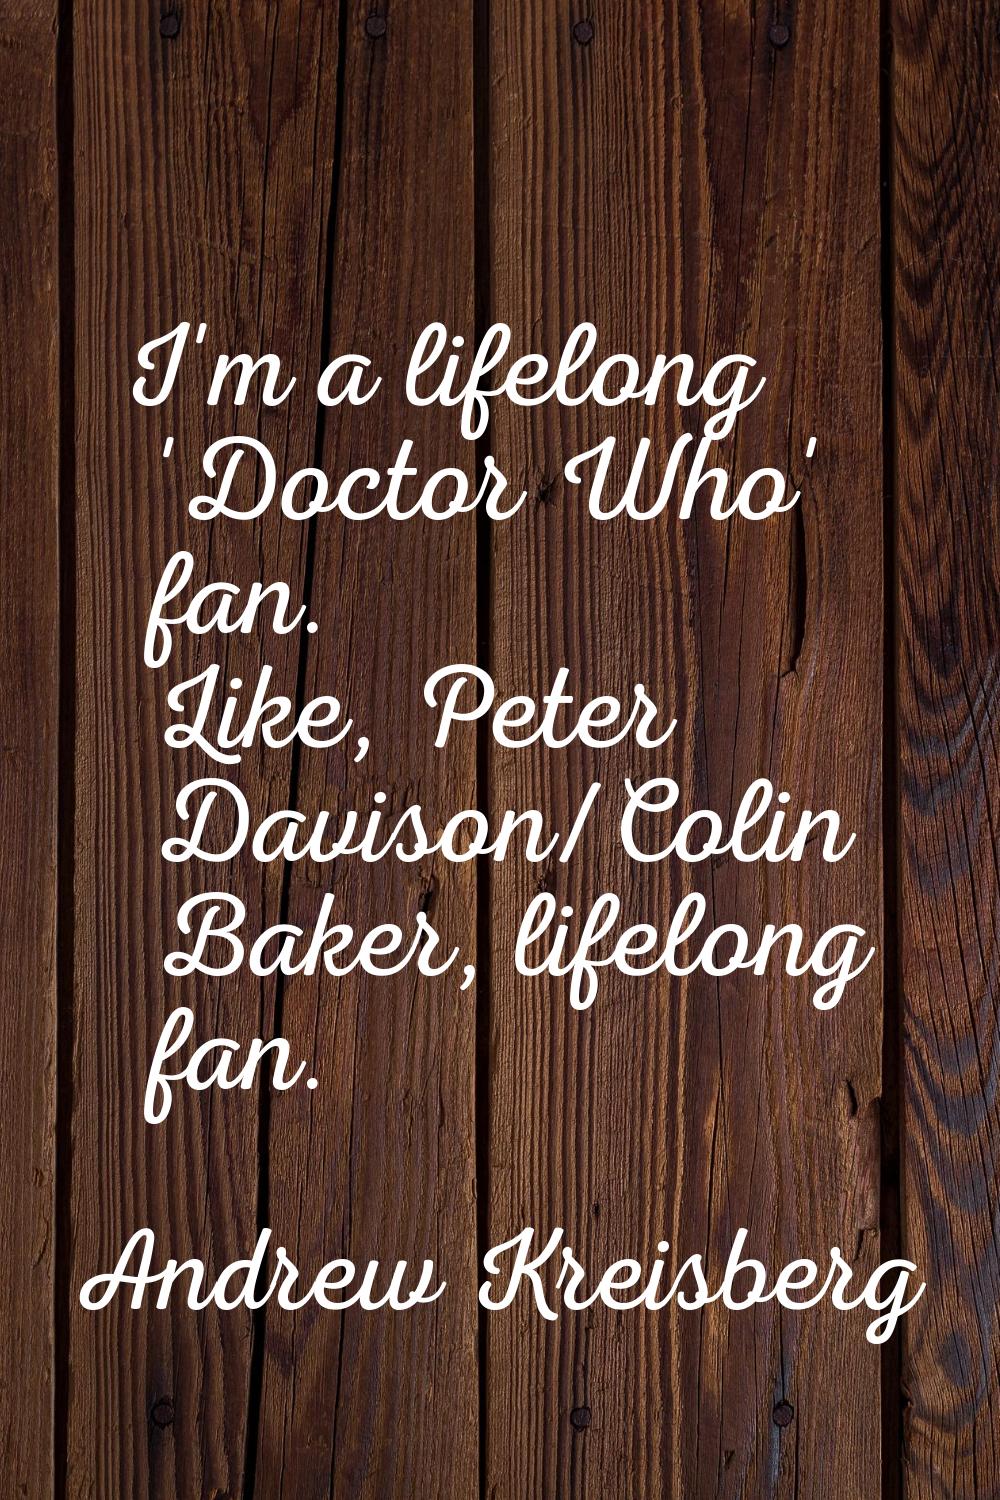 I'm a lifelong 'Doctor Who' fan. Like, Peter Davison/Colin Baker, lifelong fan.